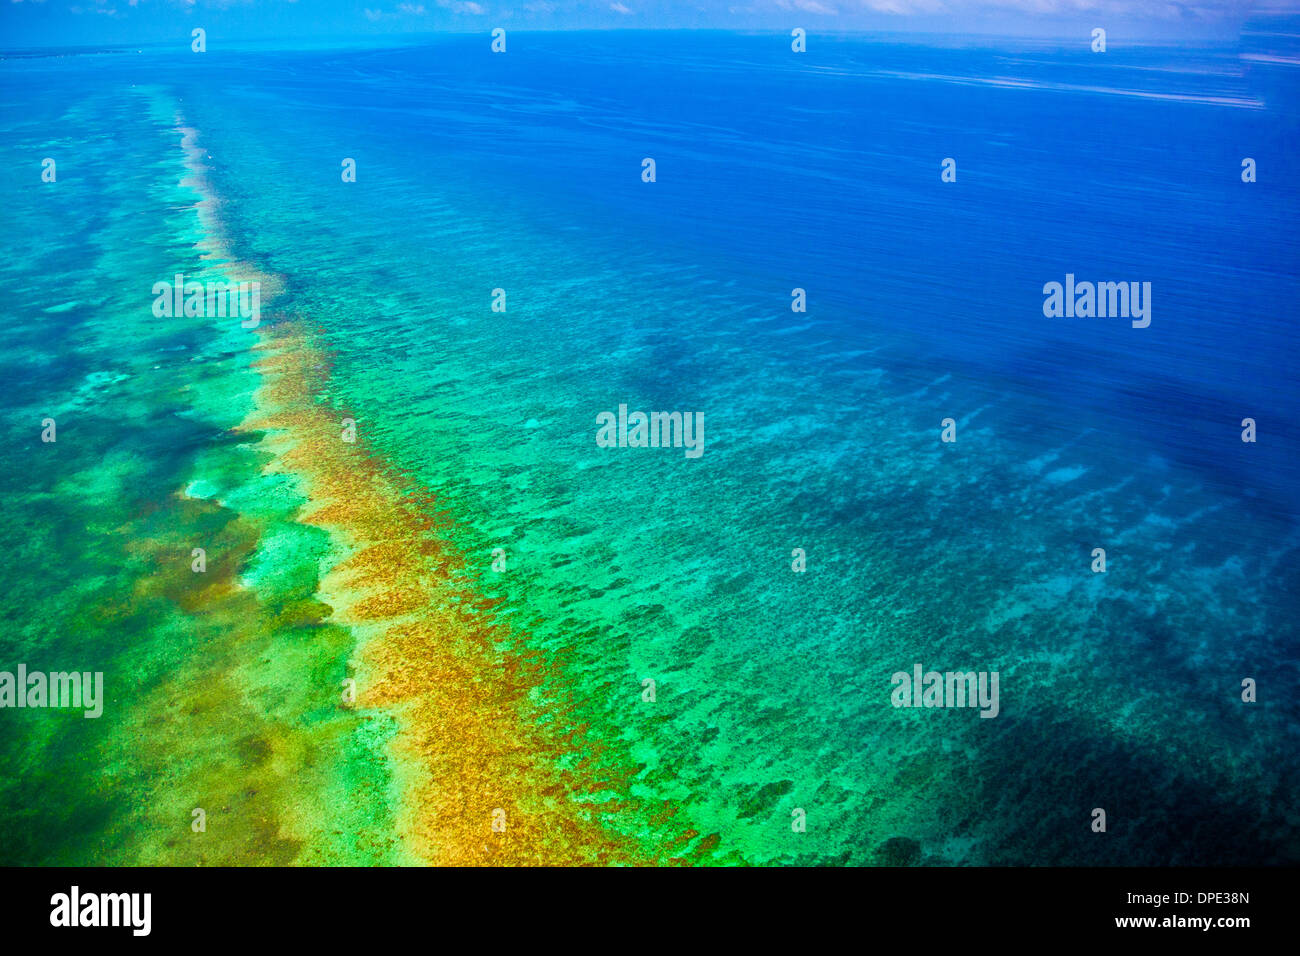 Dettaglio Reef Belize Mar dei Caraibi meso americana riserva Reef Lighthouse Reef Atoll vista aerea Foto Stock